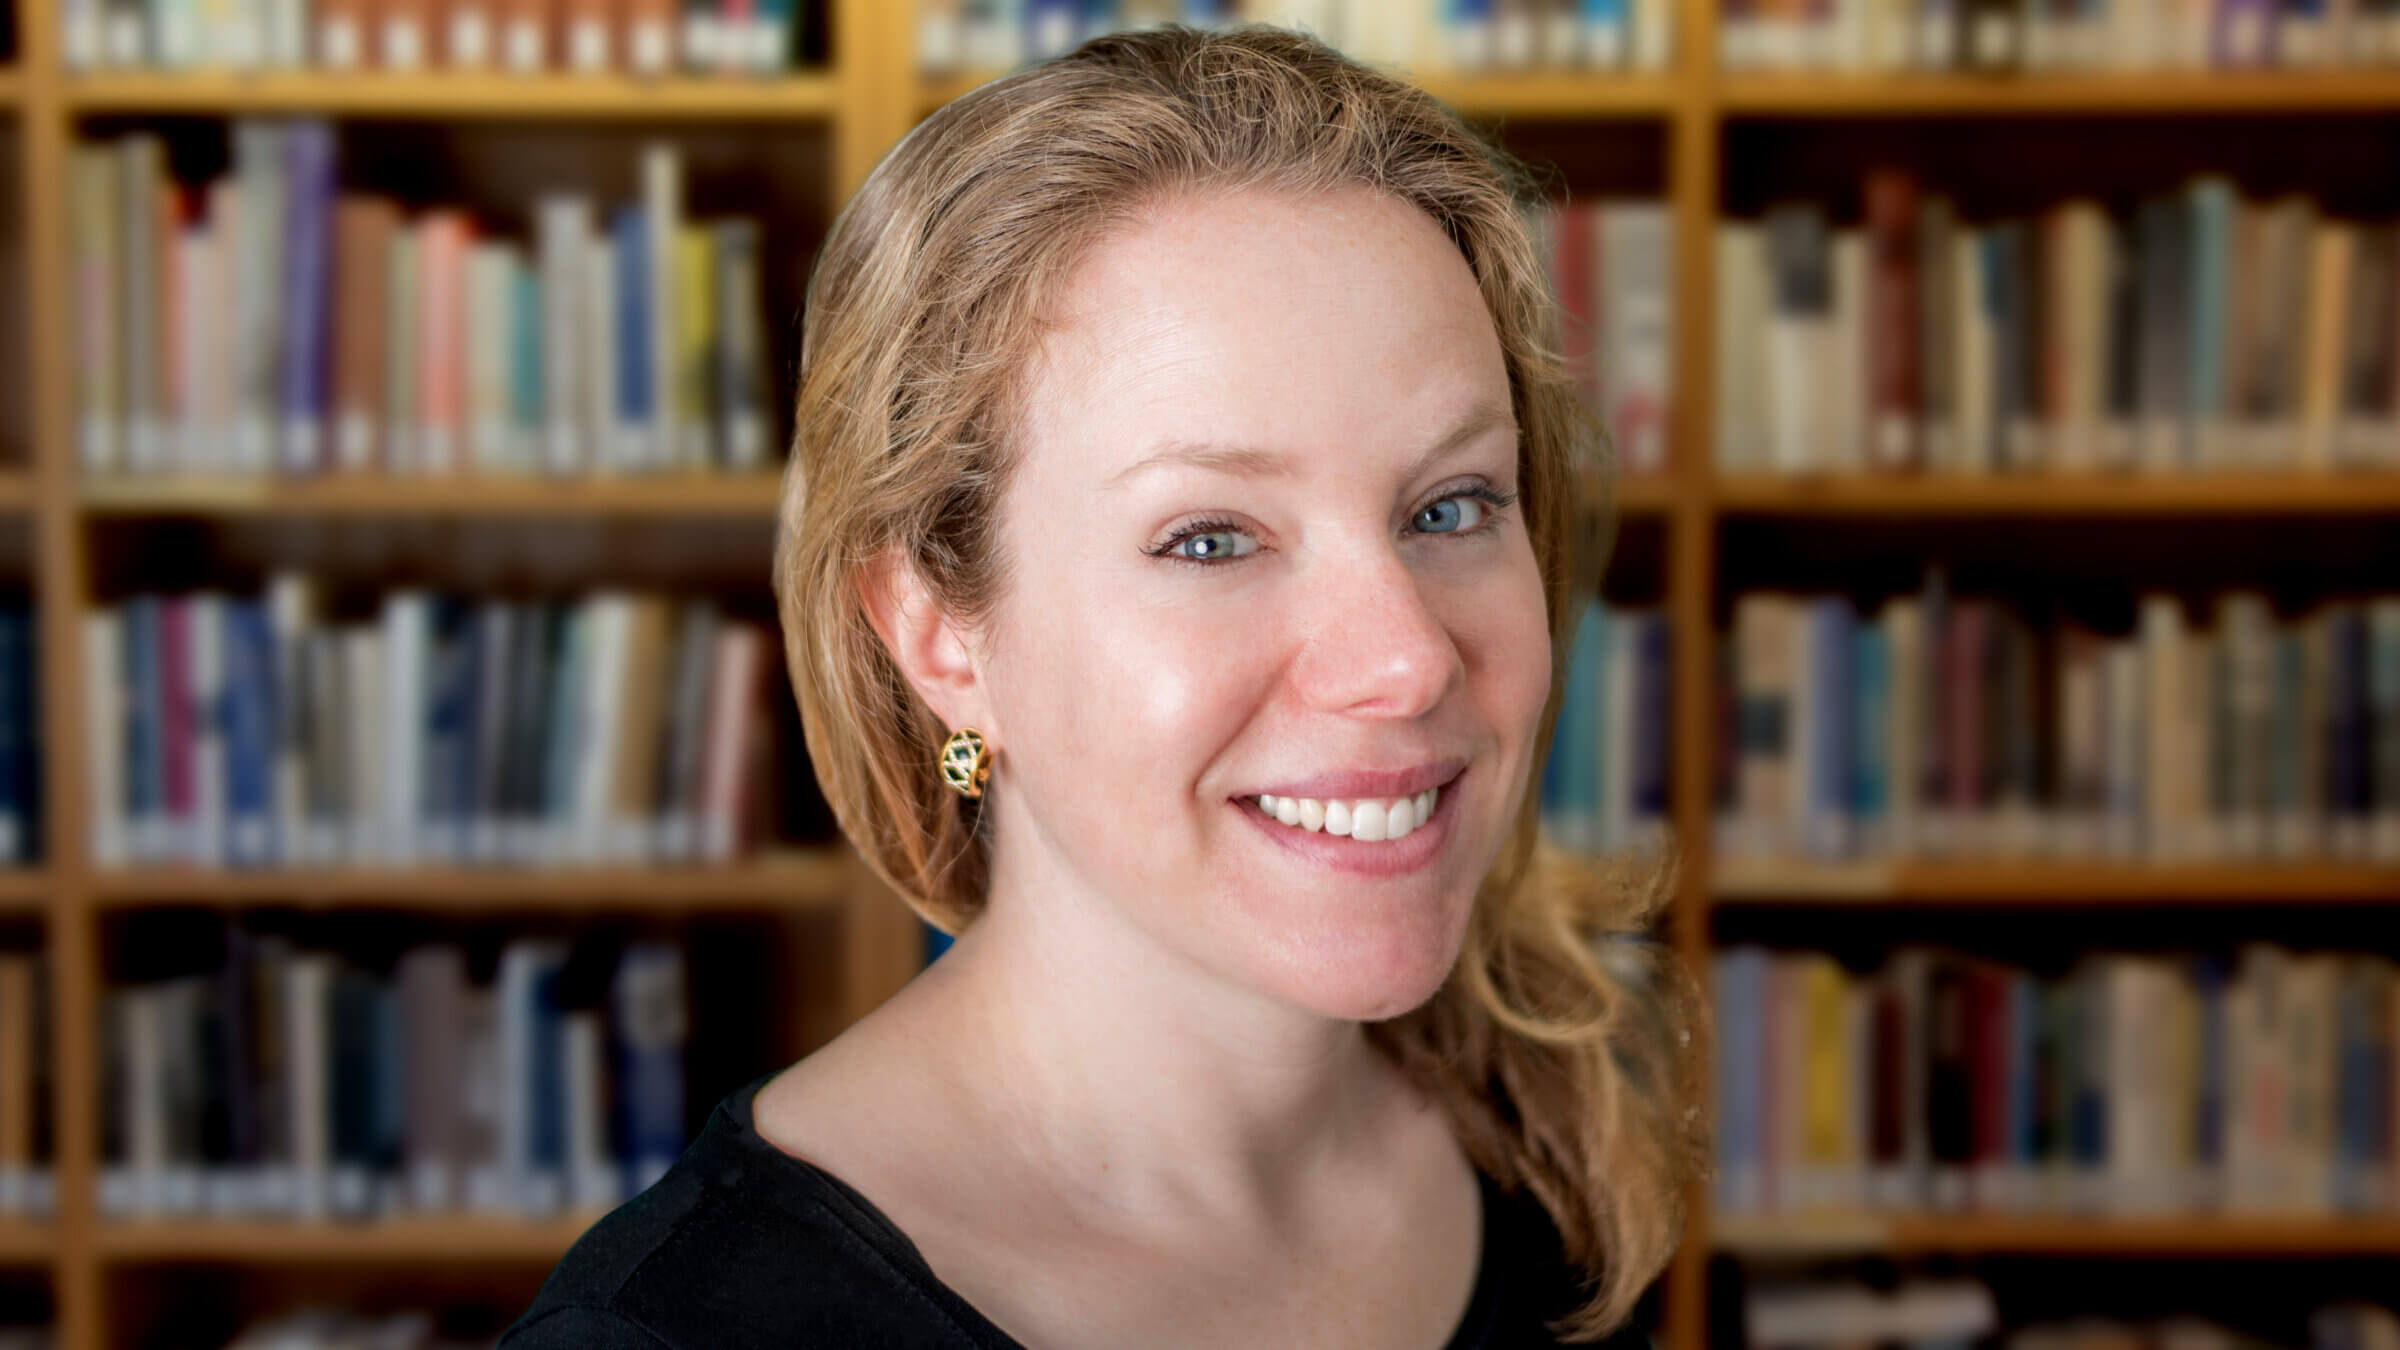 Rachel Barenbaum portrait photo in front of a bookshelf